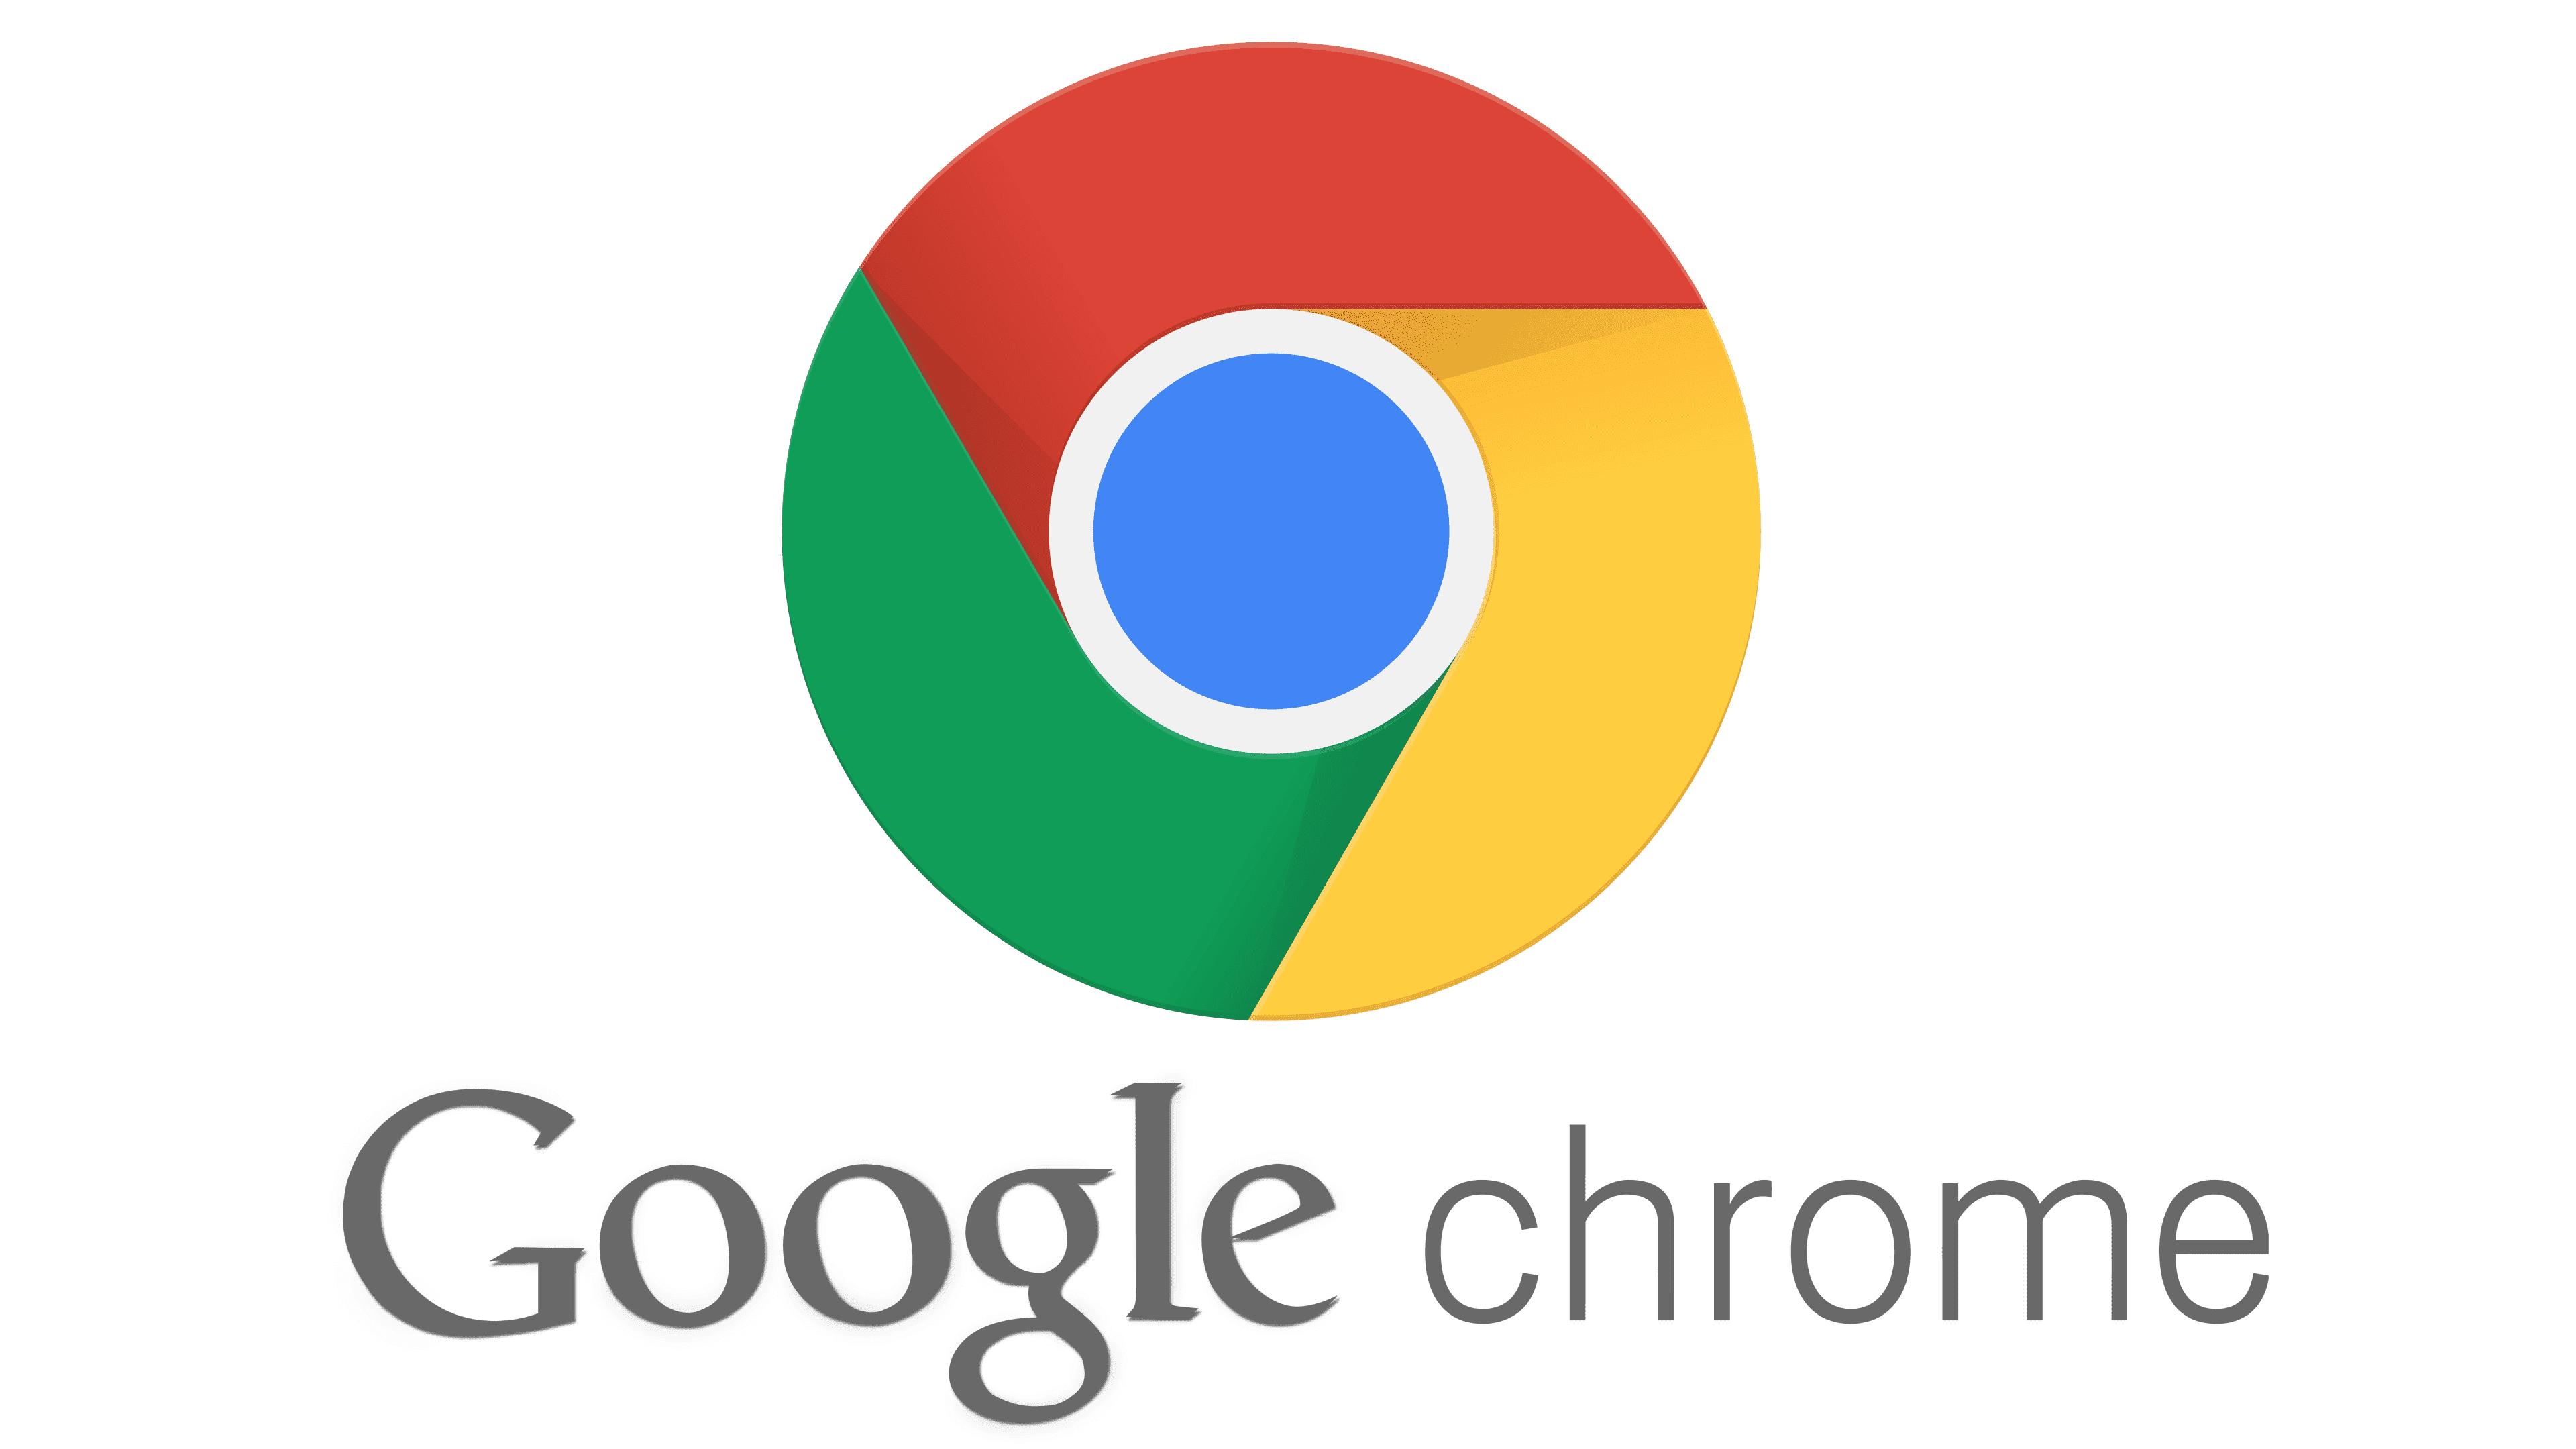 Google ch. Google Chrome. Google Chrome логотип. Google frame. Google Home.